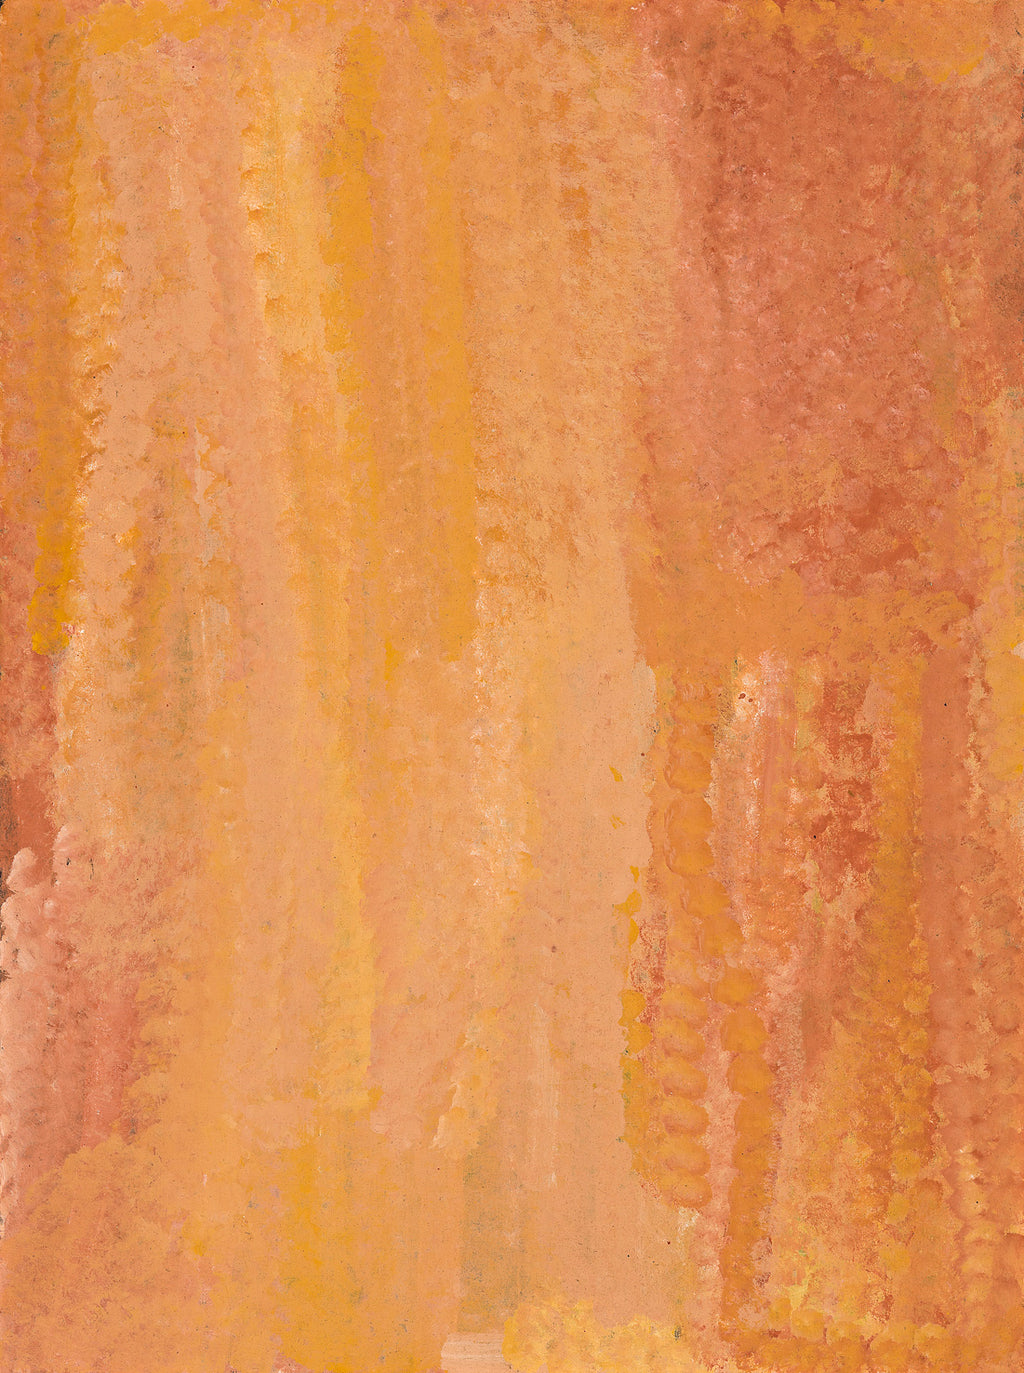 Emily Kame Kngwarreye, 'Outback Summer', 1994, 94A049, 90 x 120 cm